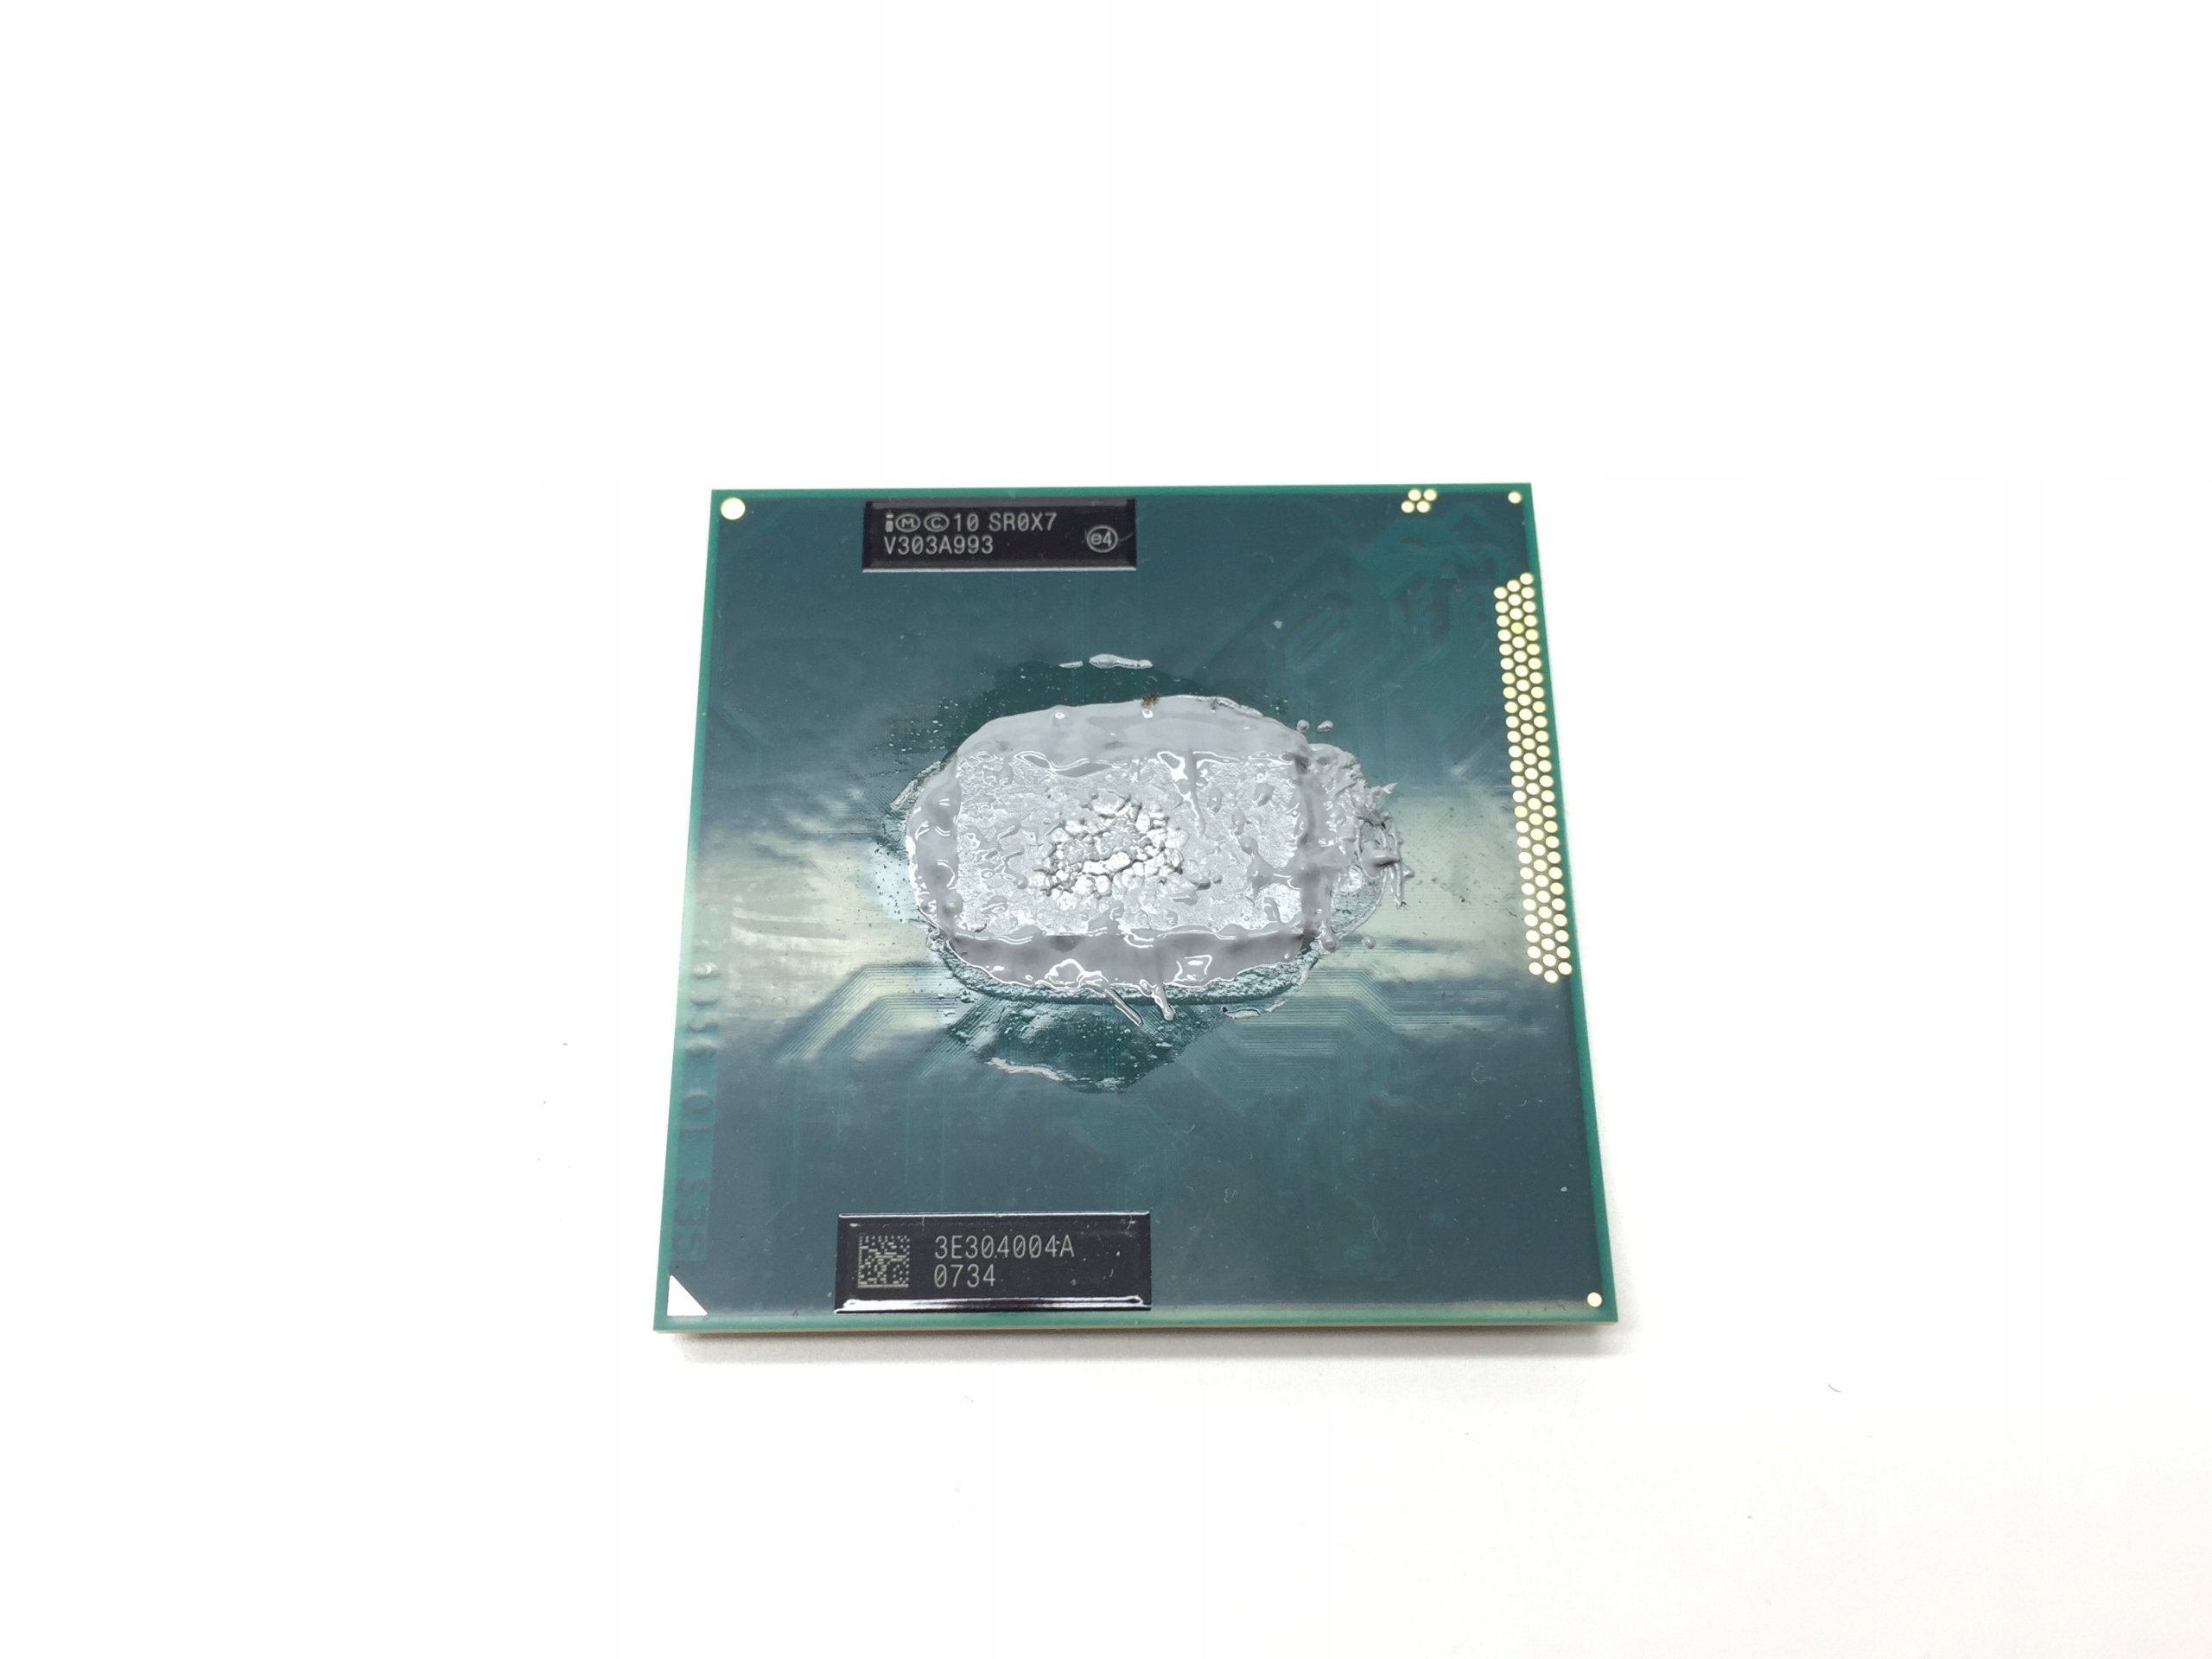 Procesor Intel Core i5-3380m SR0X7